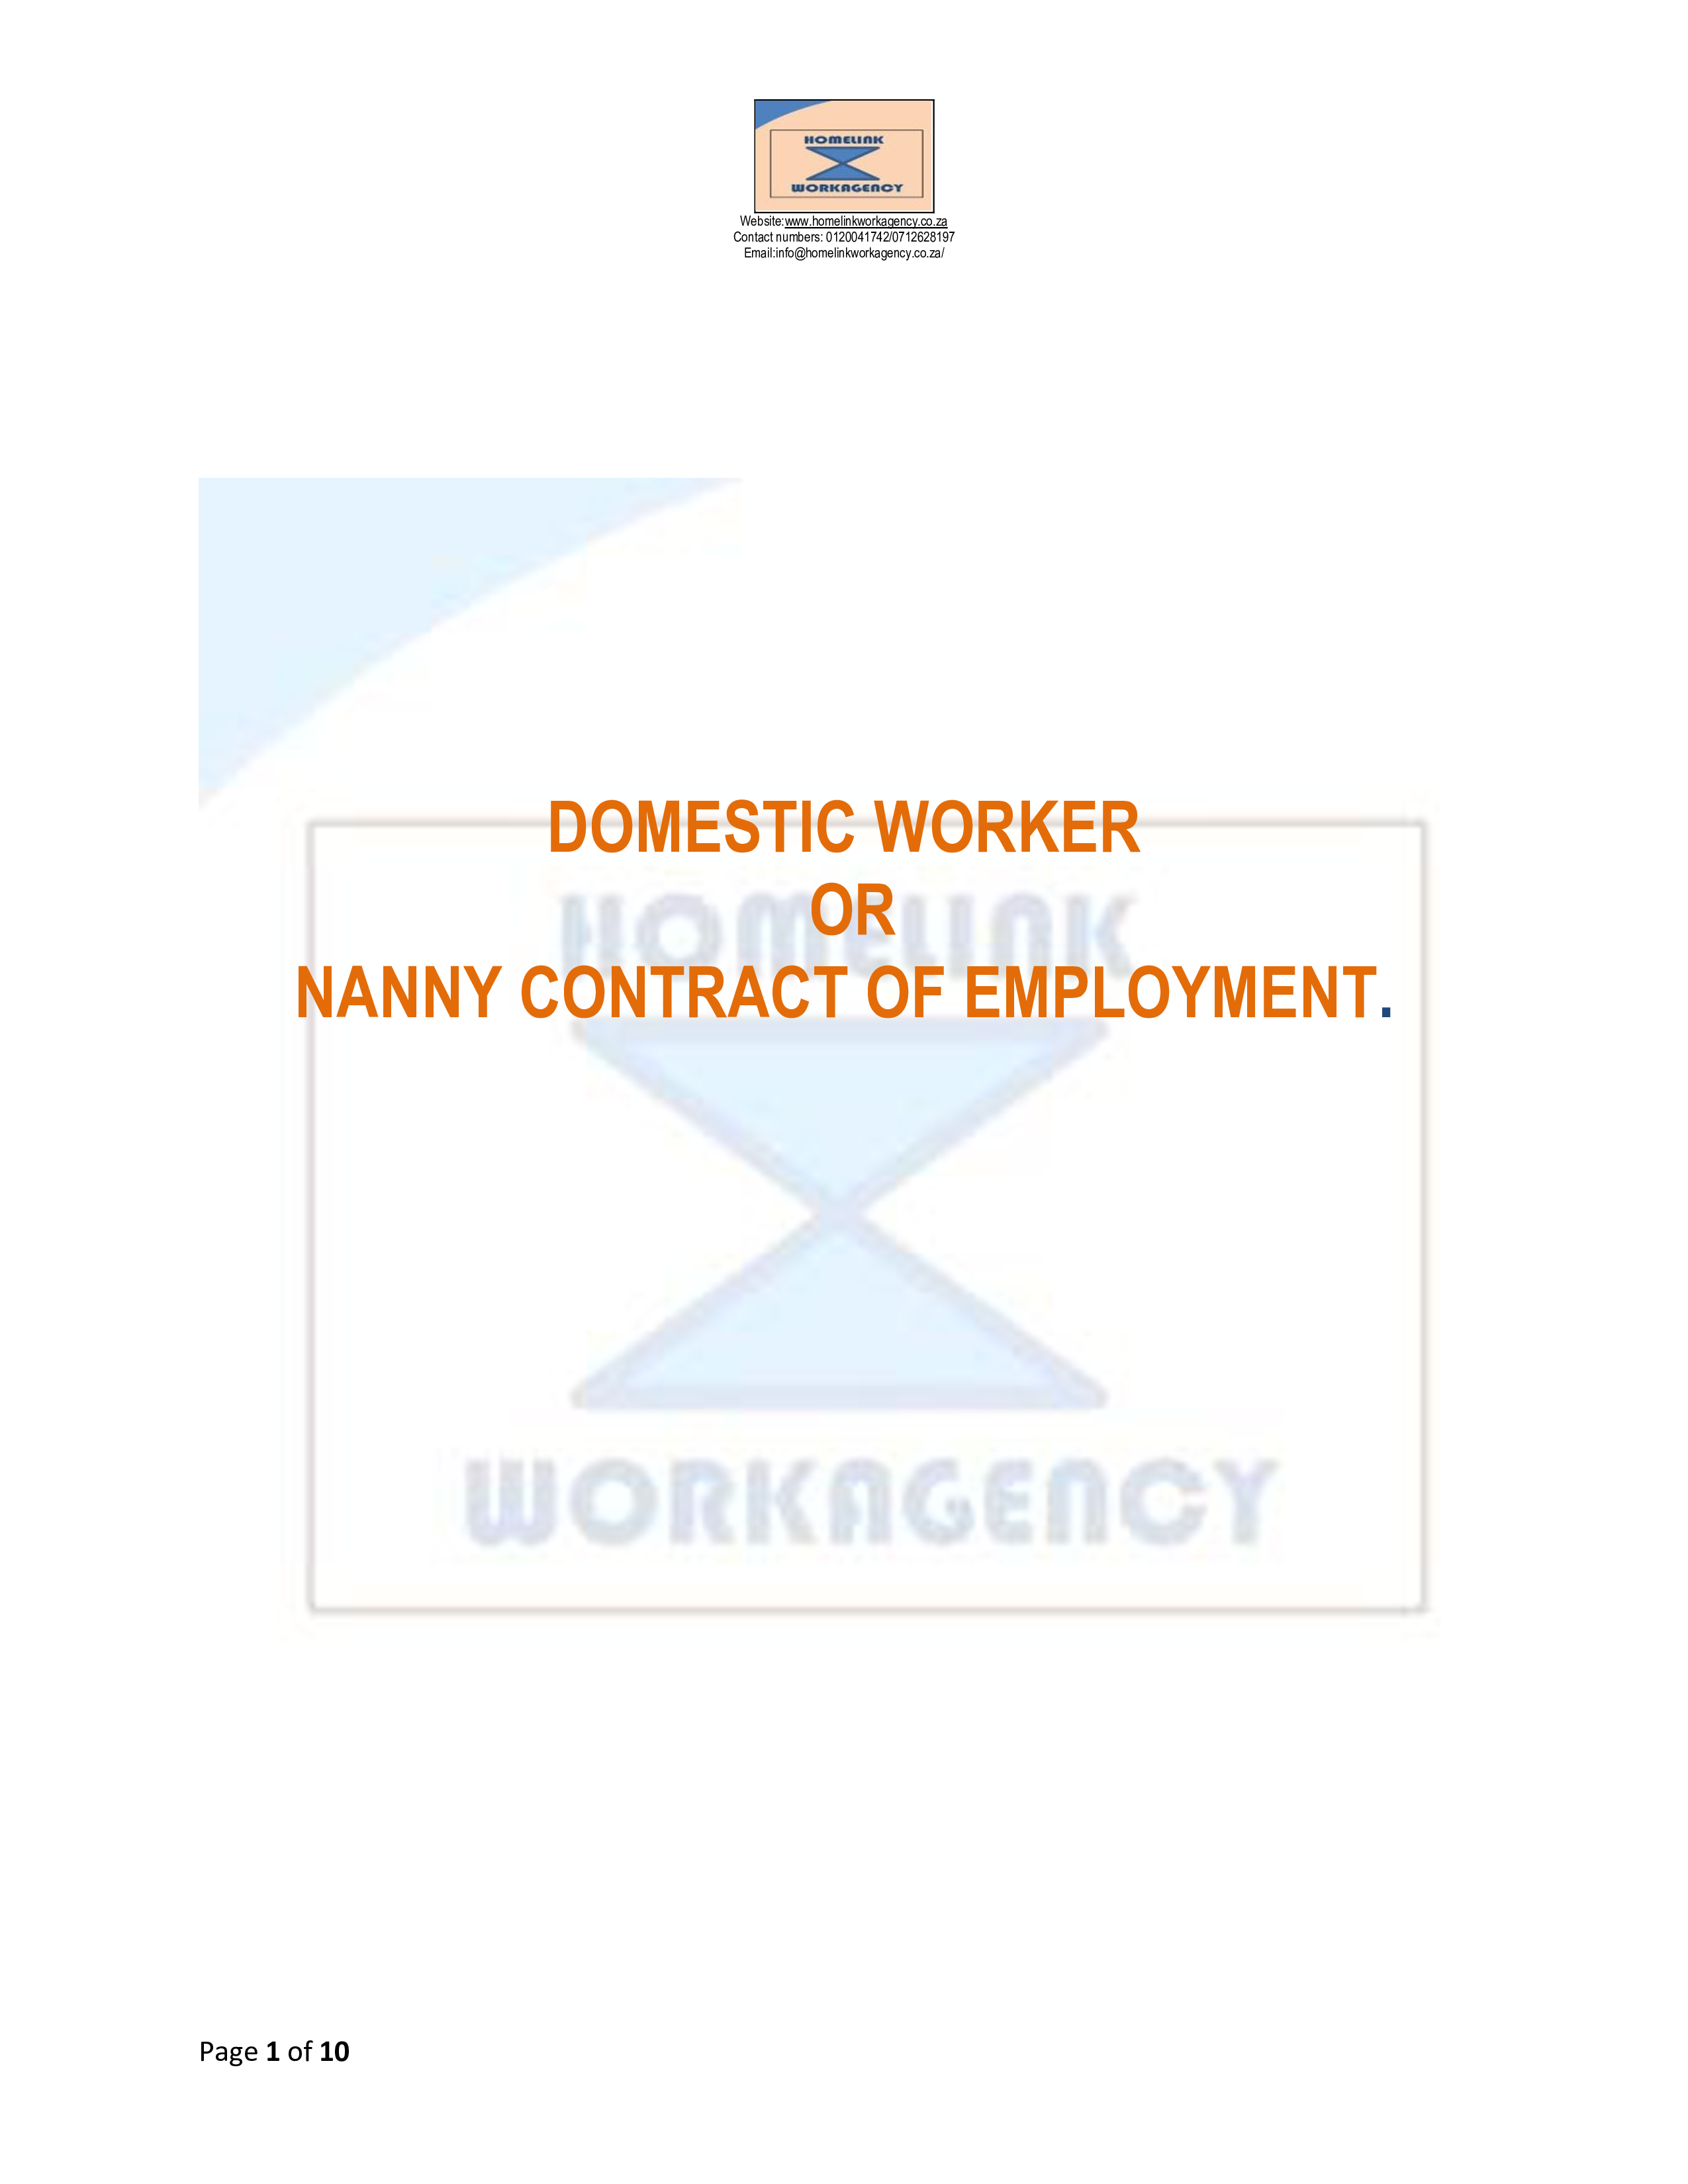 domestic nanny contract plantilla imagen principal